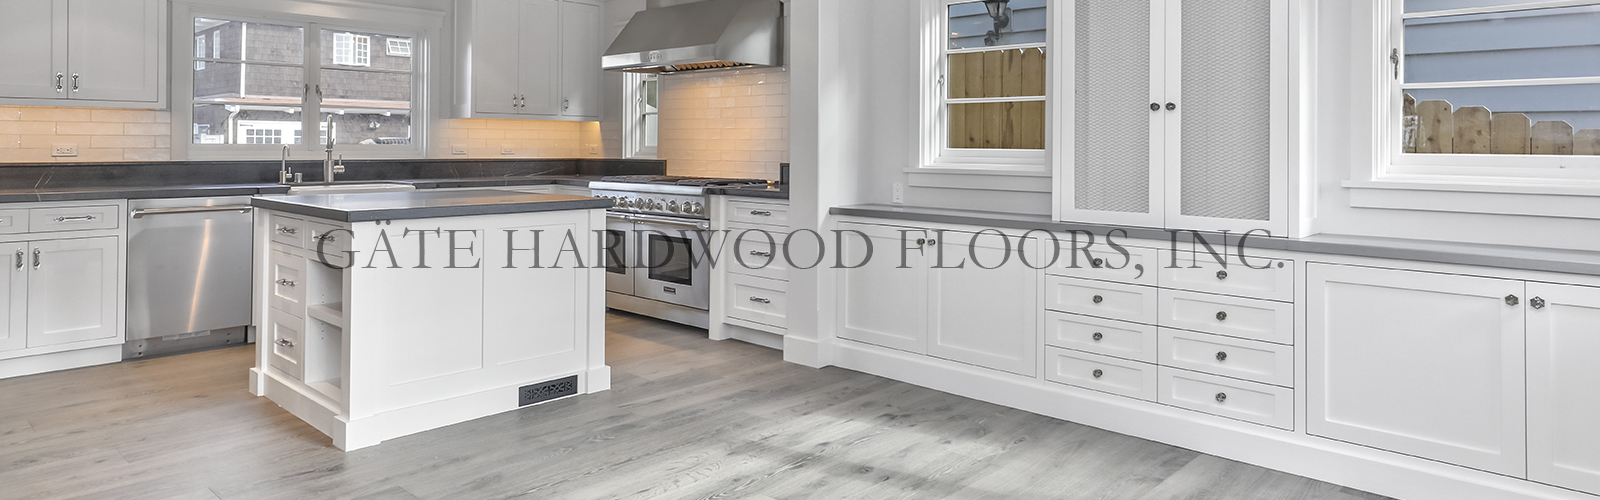 Gate Hardwood Floors Add Value To Your Home Hardwood Flooring